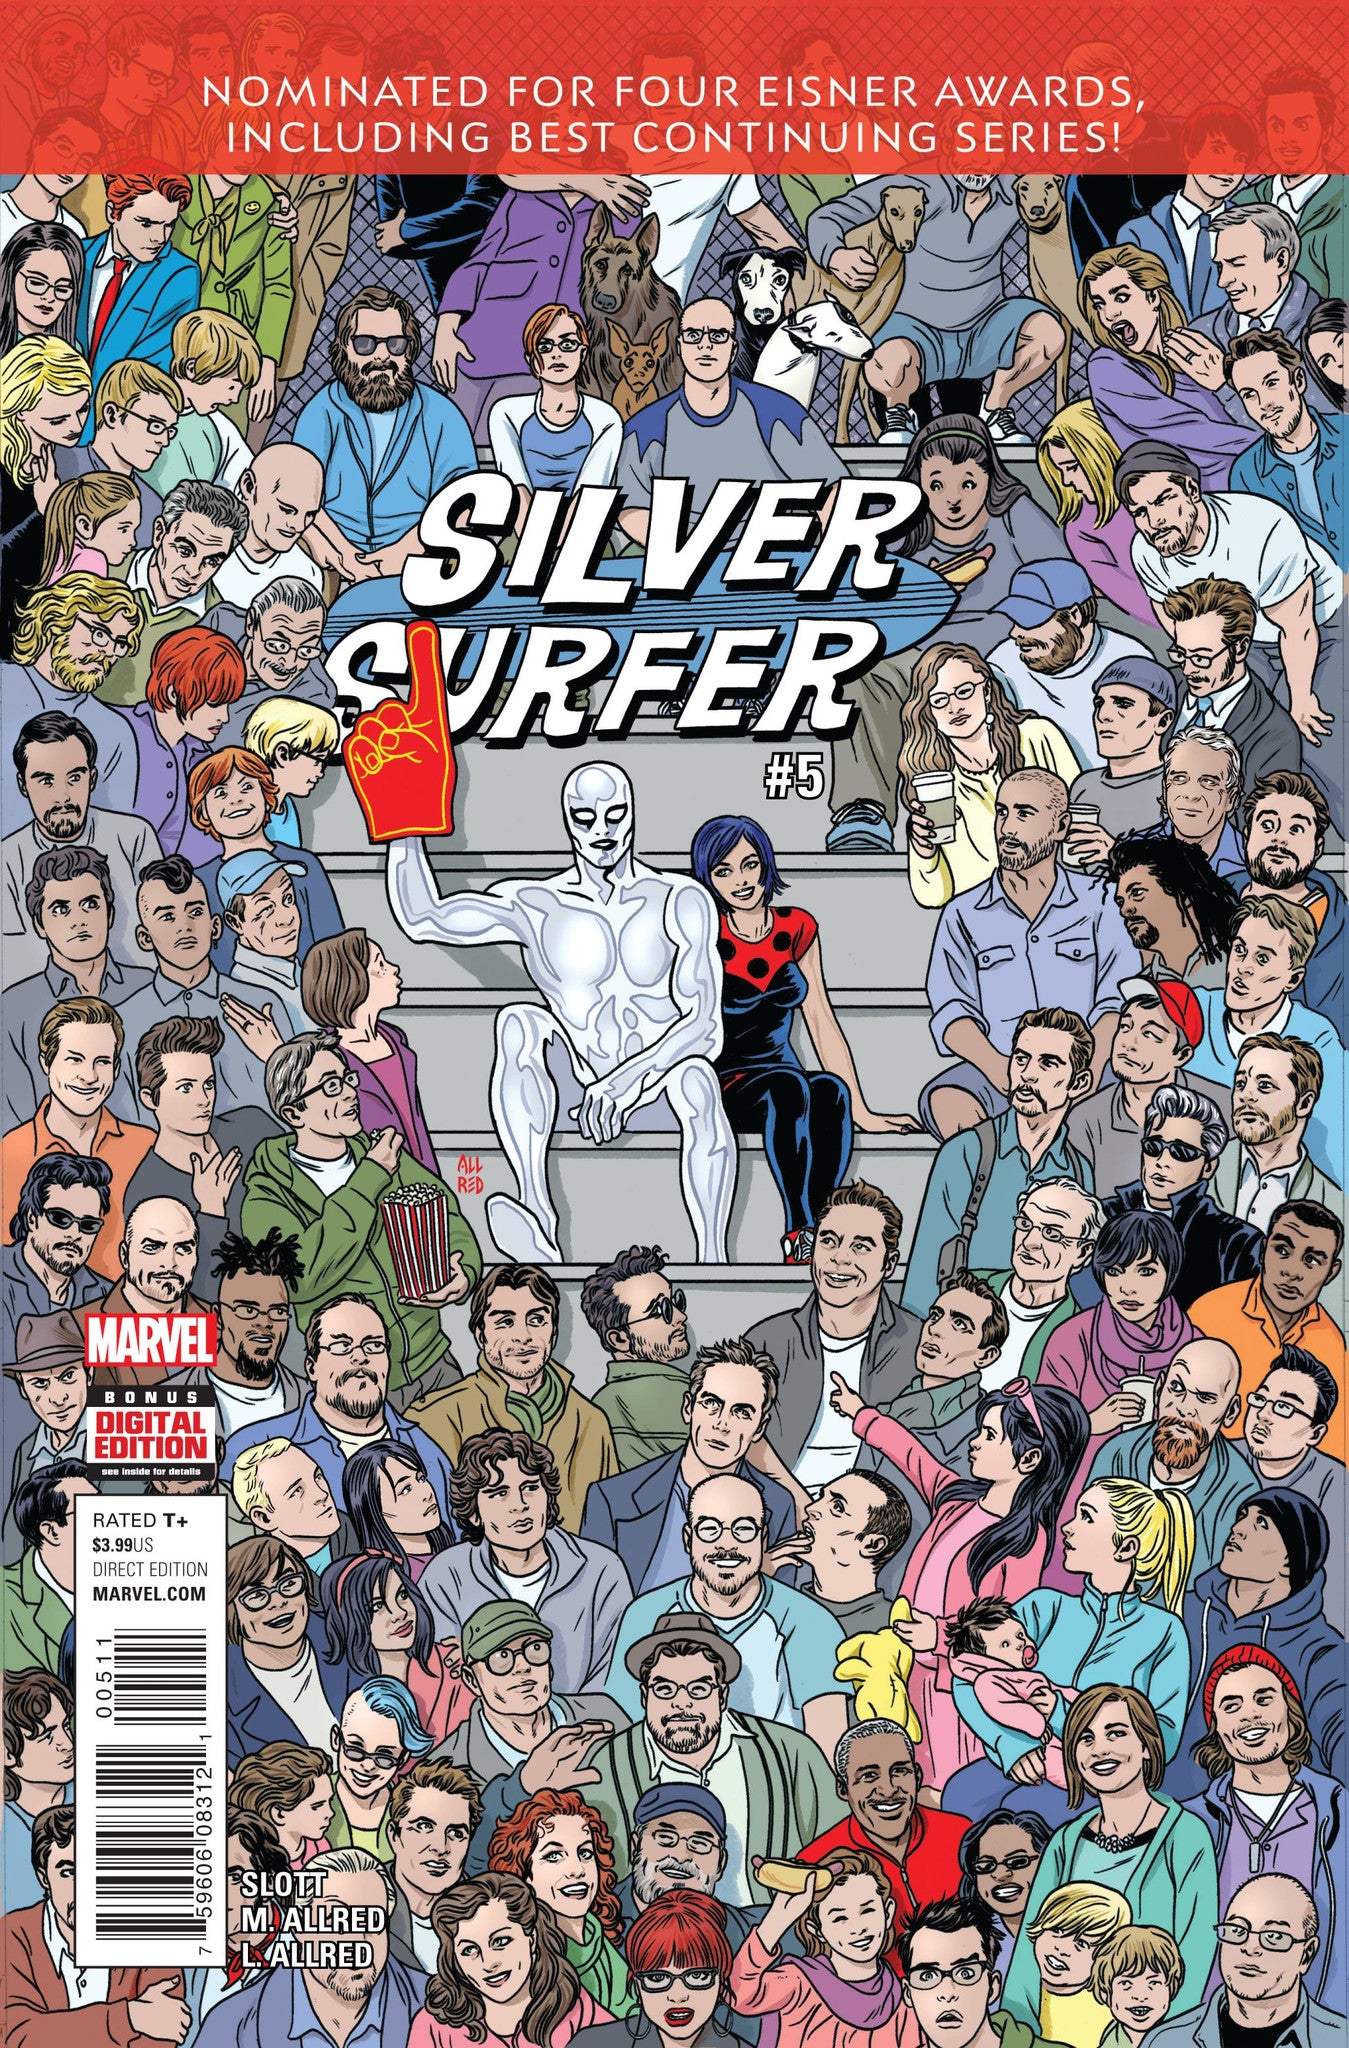 SILVER SURFER #5 COVER